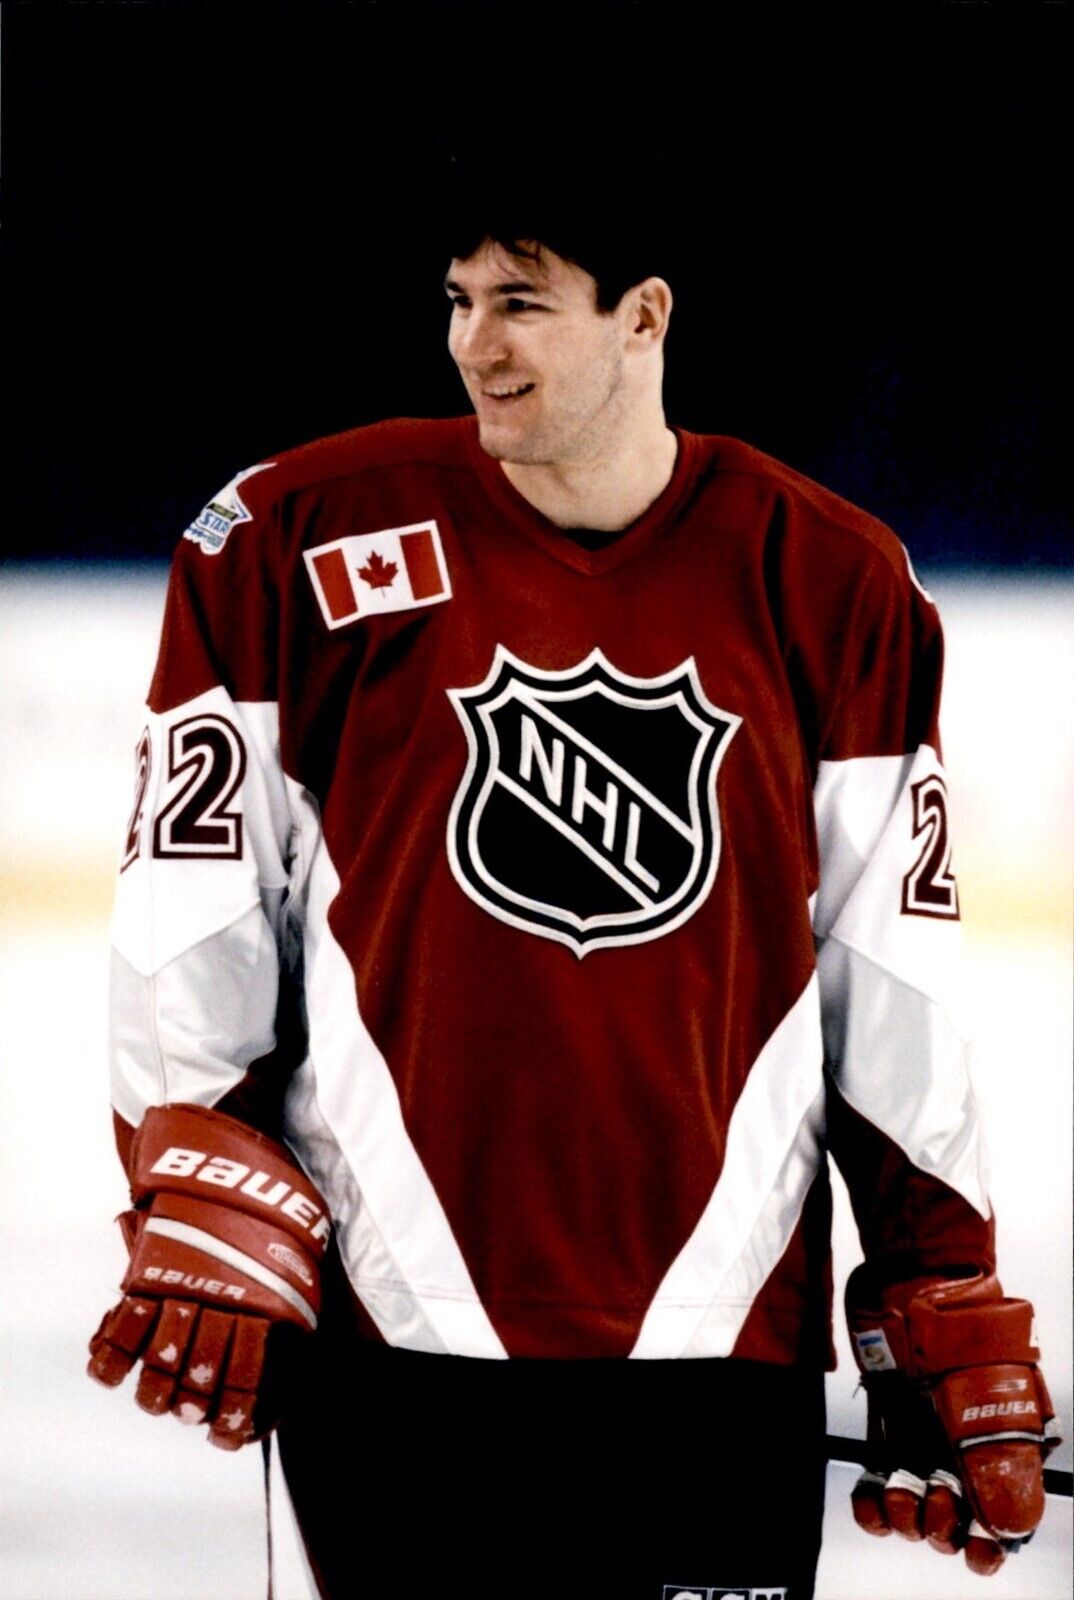 PF23 1999 Orig Photo KEITH PRIMEAU CAROLINA HURRICANES NHL HOCKEY ALL-STAR GAME